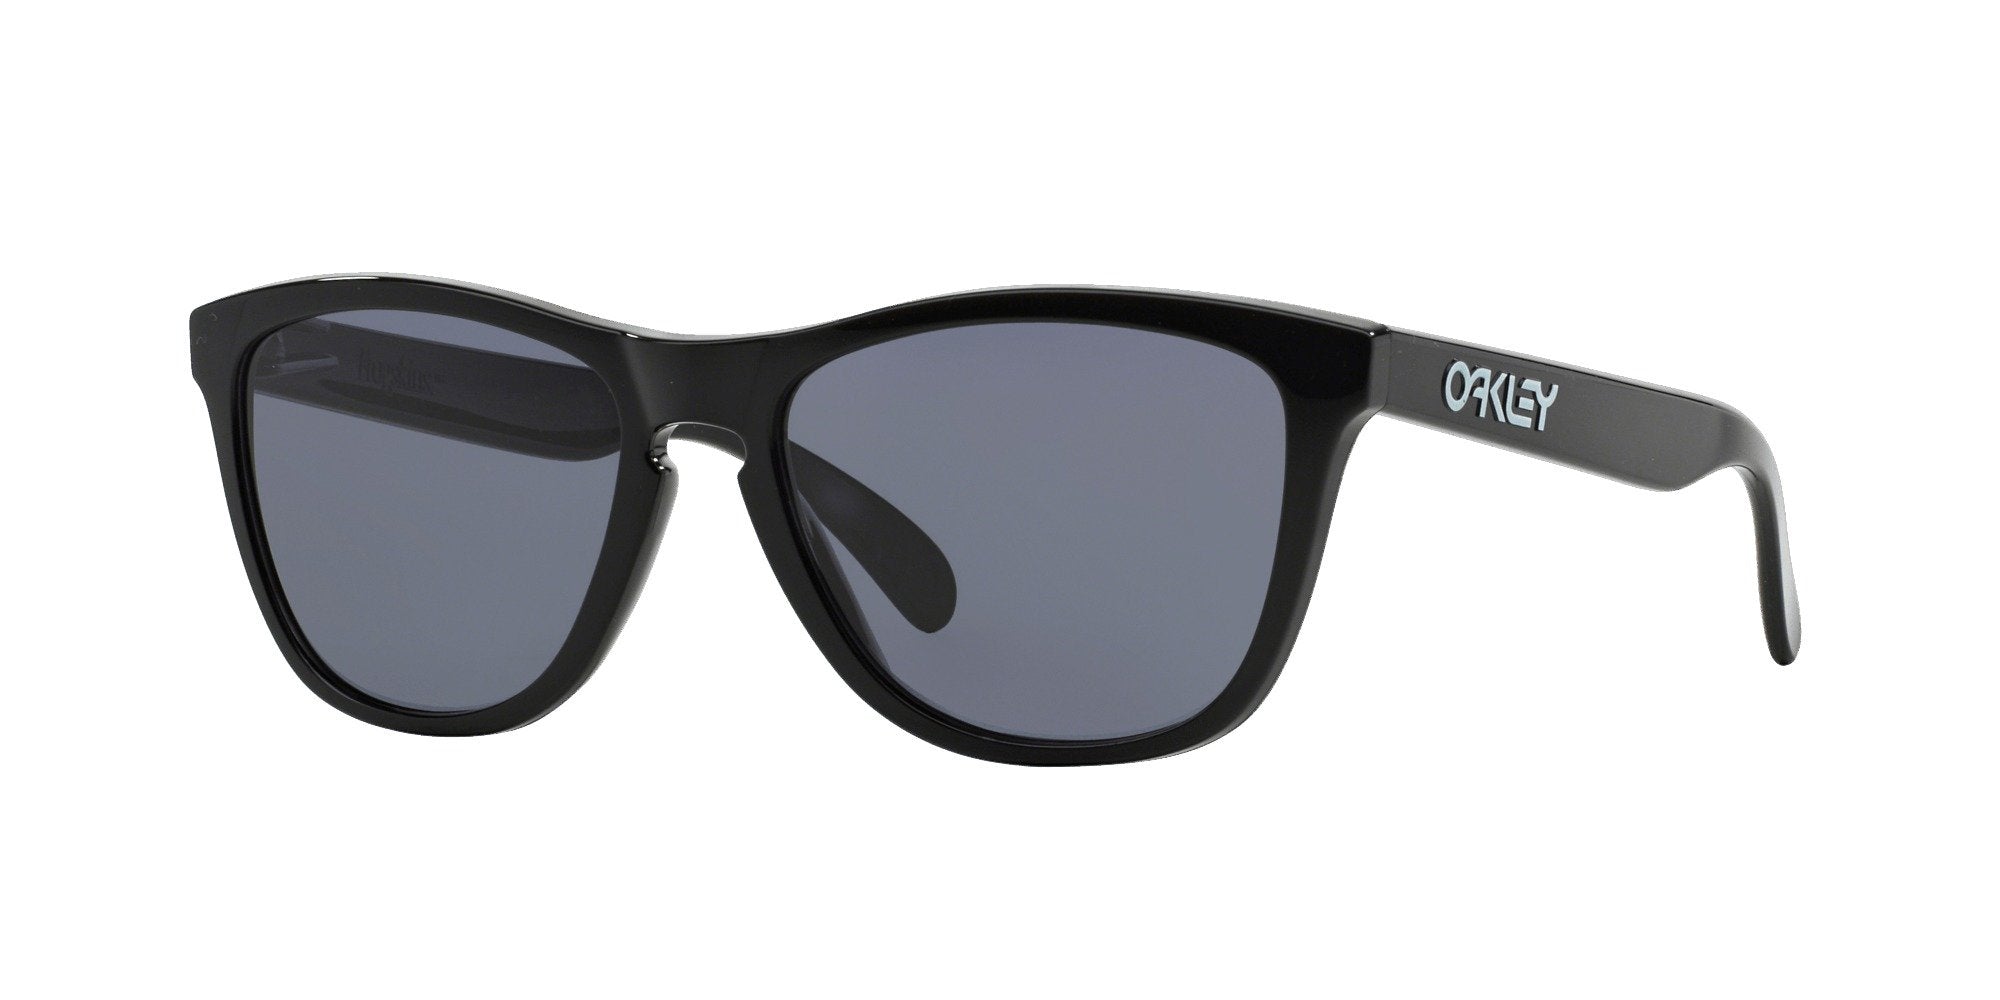 Oakley OO9013 Sunglasses | Fashion Eyewear